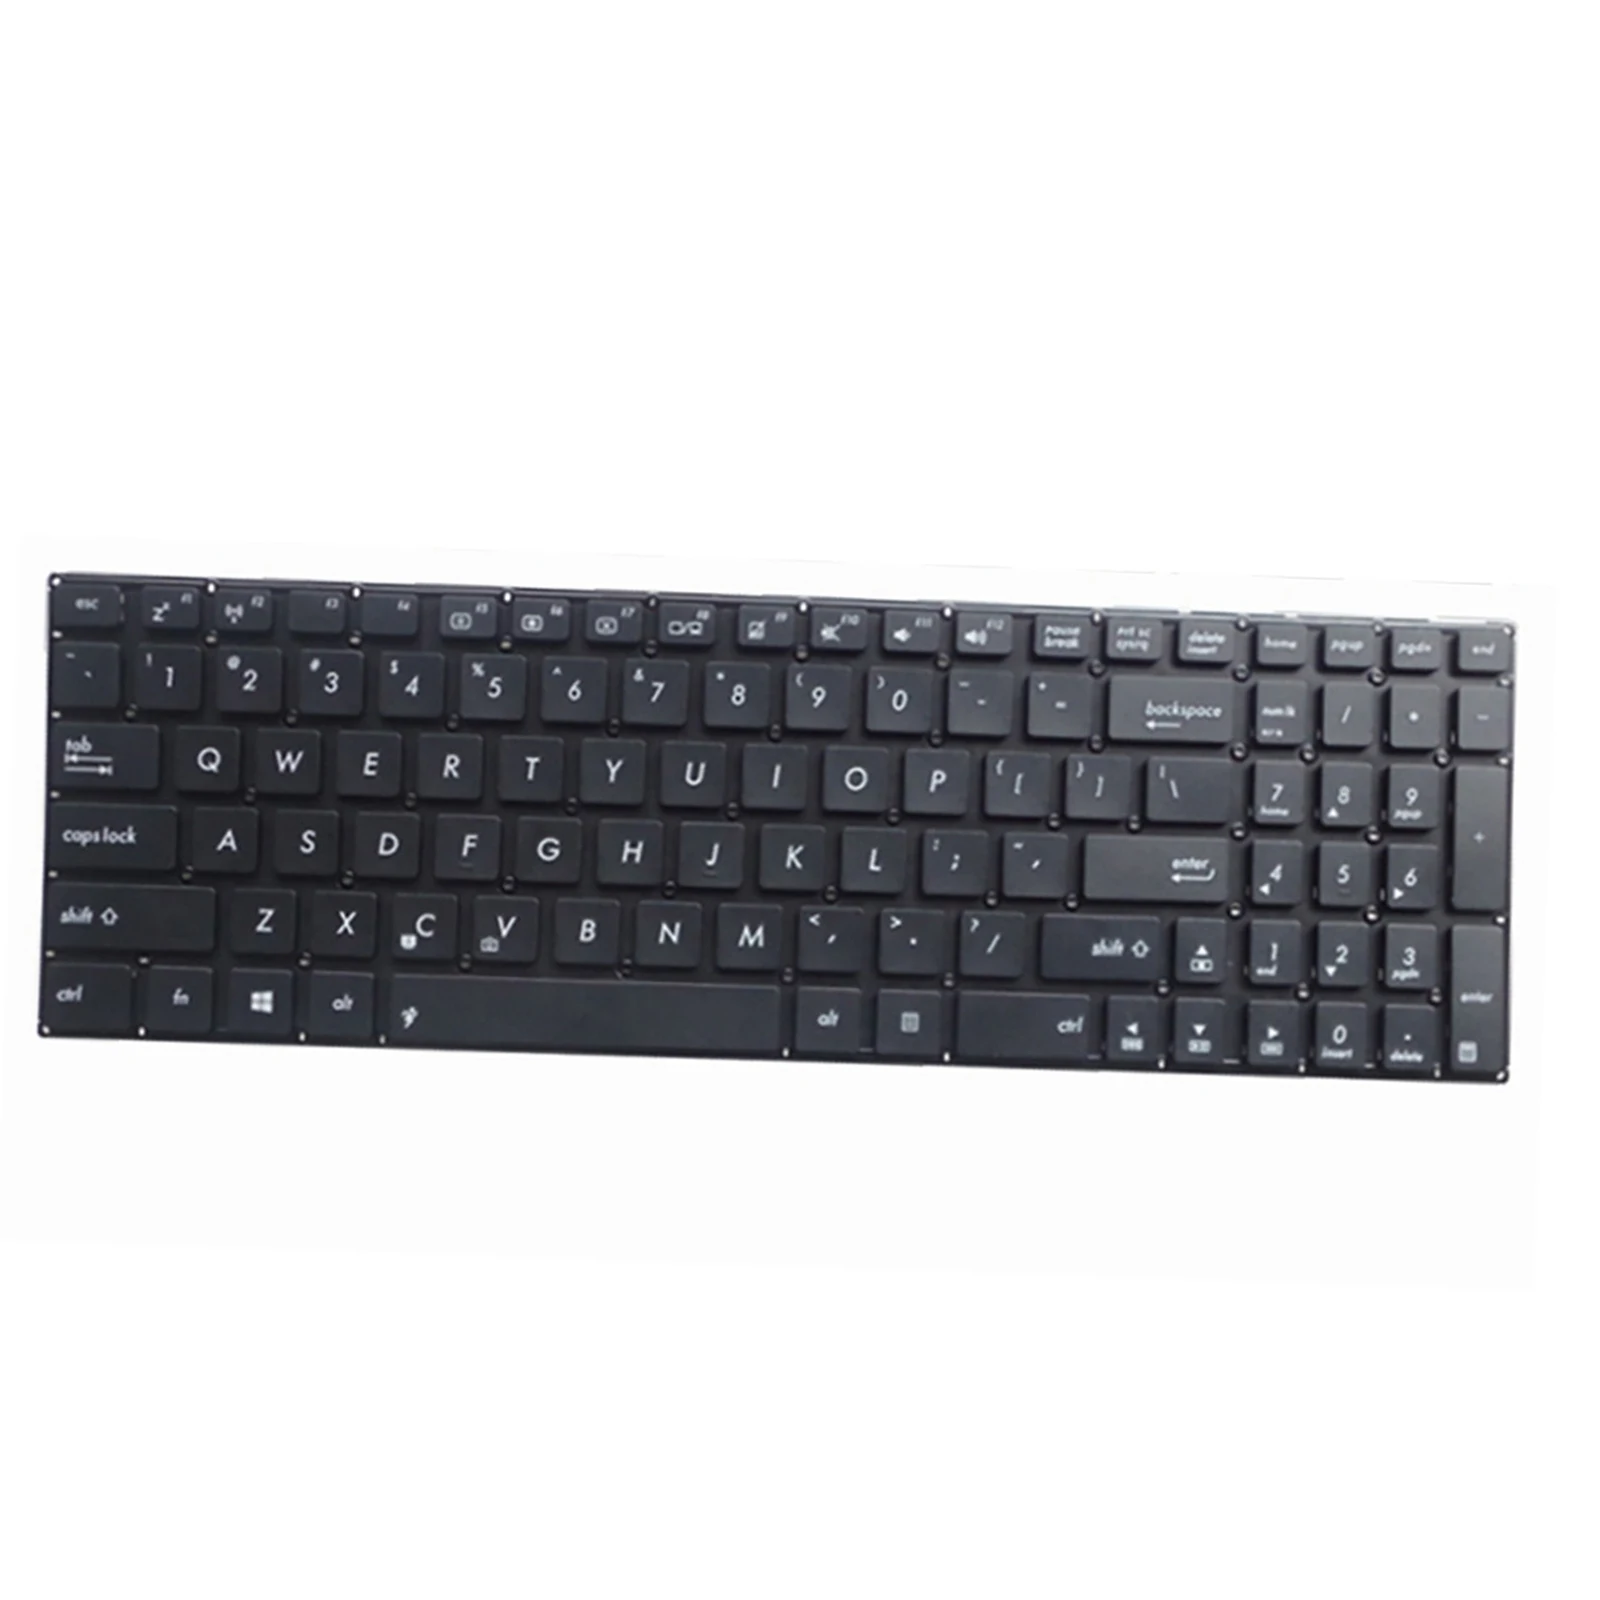 New Full Keyboard US English Layout Keypad Notebook Repair Accessory for ASUS K55A K55VD K55VM A55VD R700V X501 A56